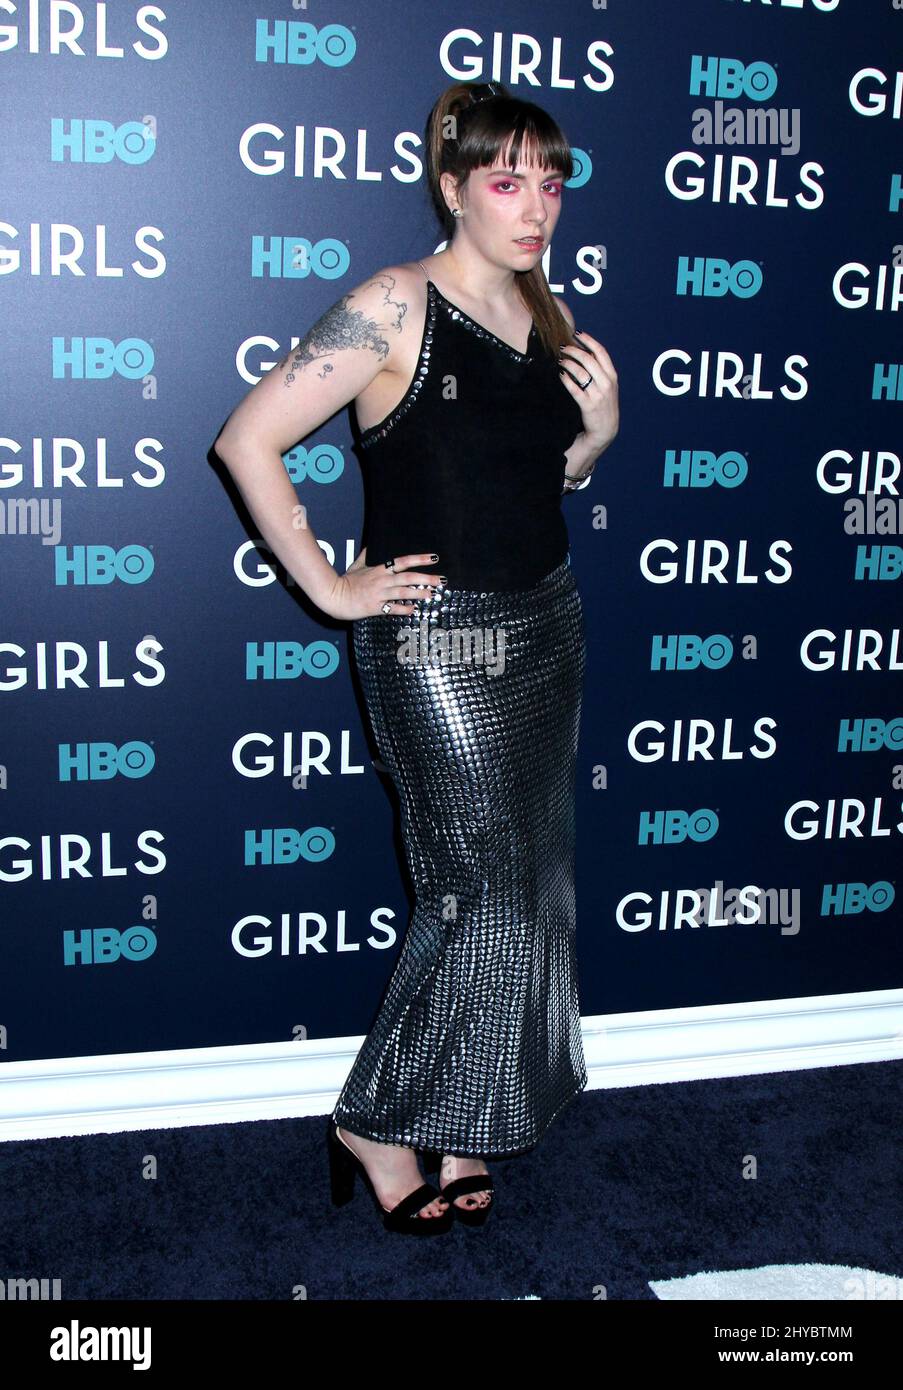 Lena Dunham Attending The Girls Sixth And Final Season Premiere Held At 